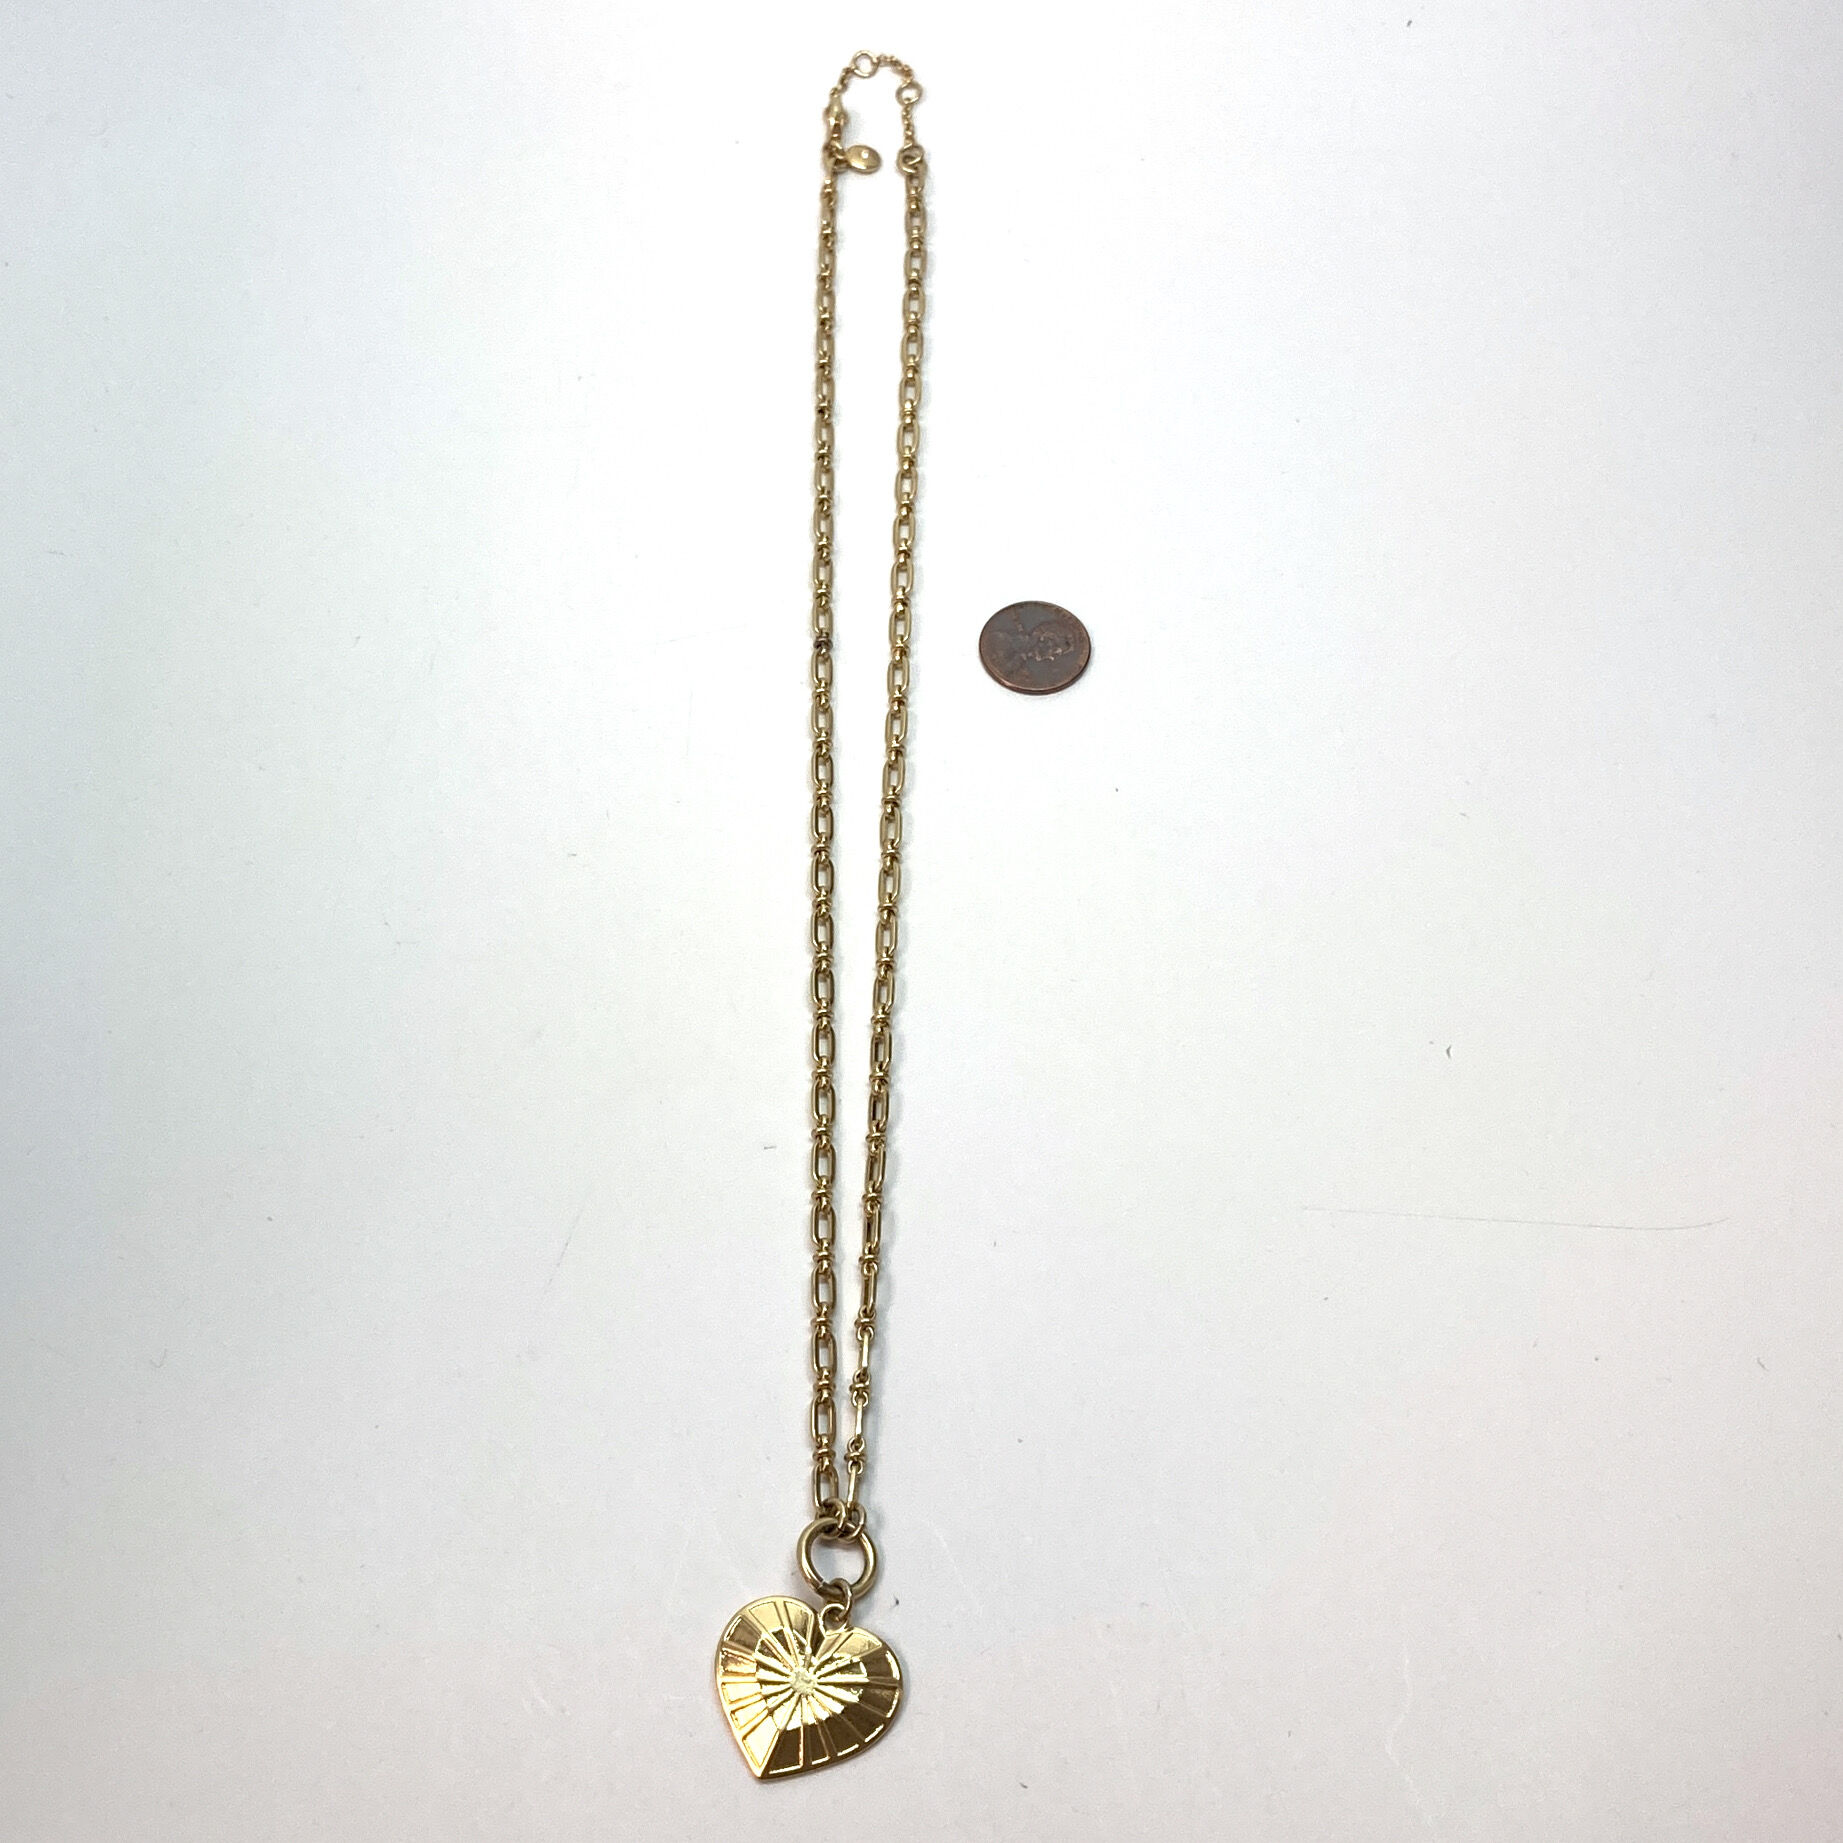 Designer Purse Diamond Pendant Necklace in 14K White Gold With 18